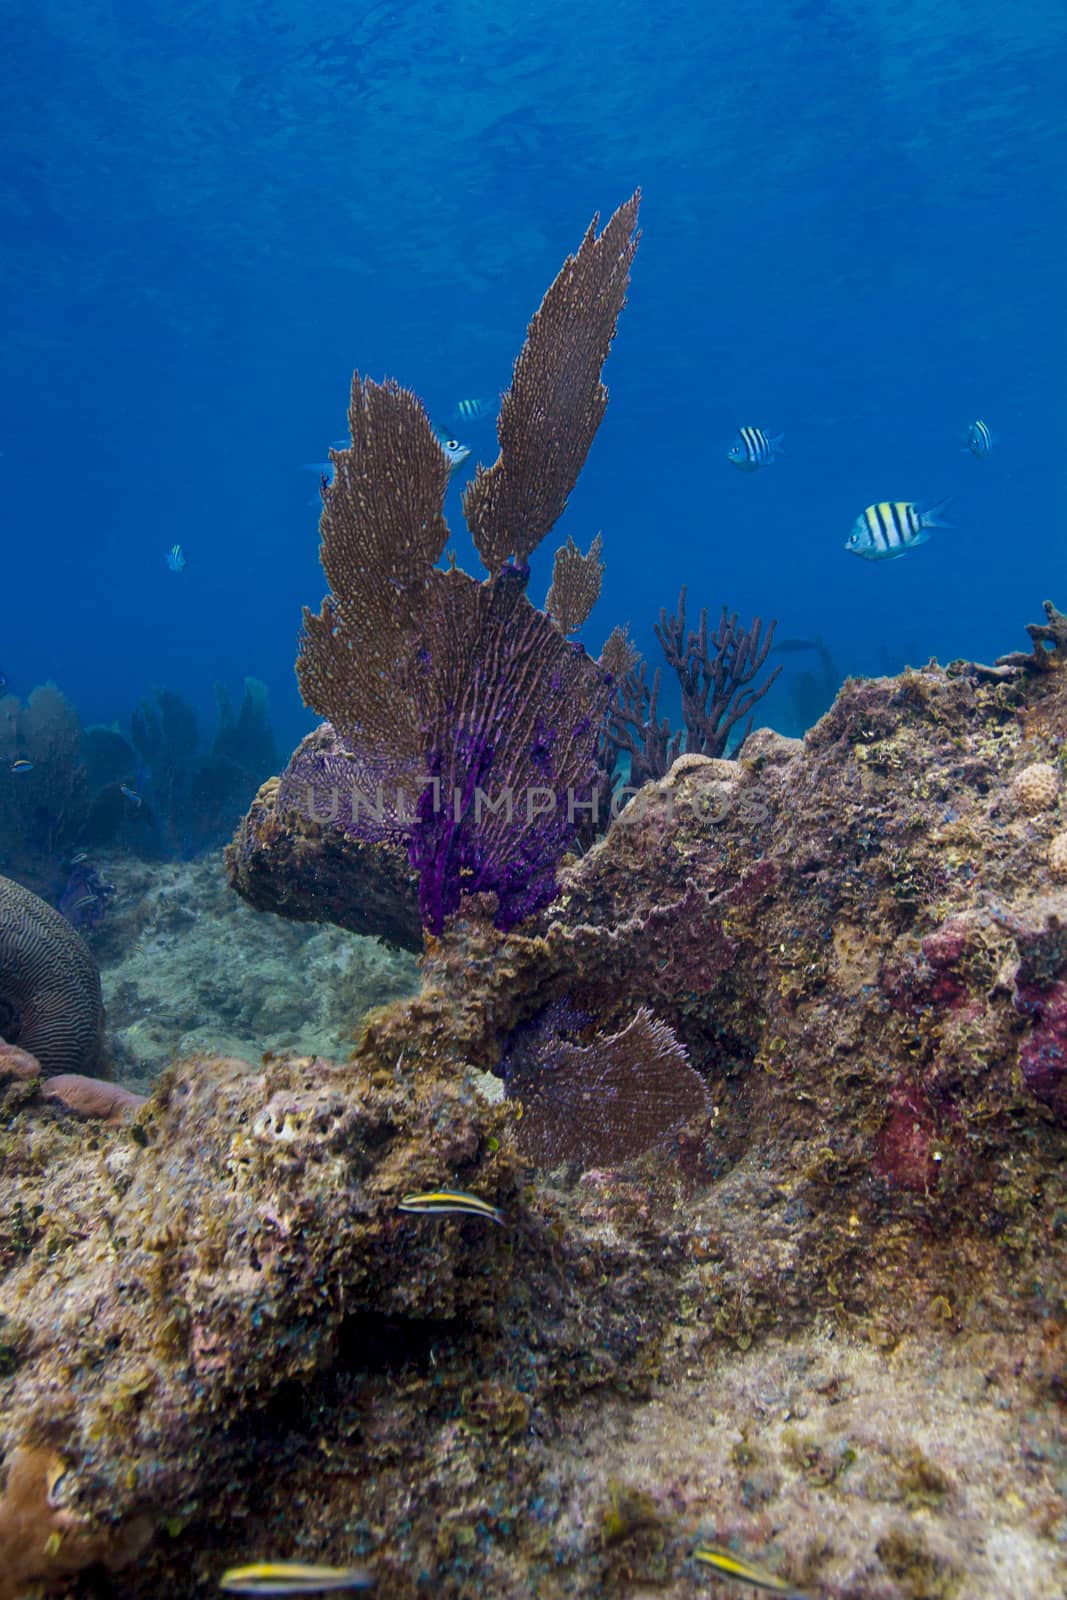 Coral fan growing on top of a rock in a reef